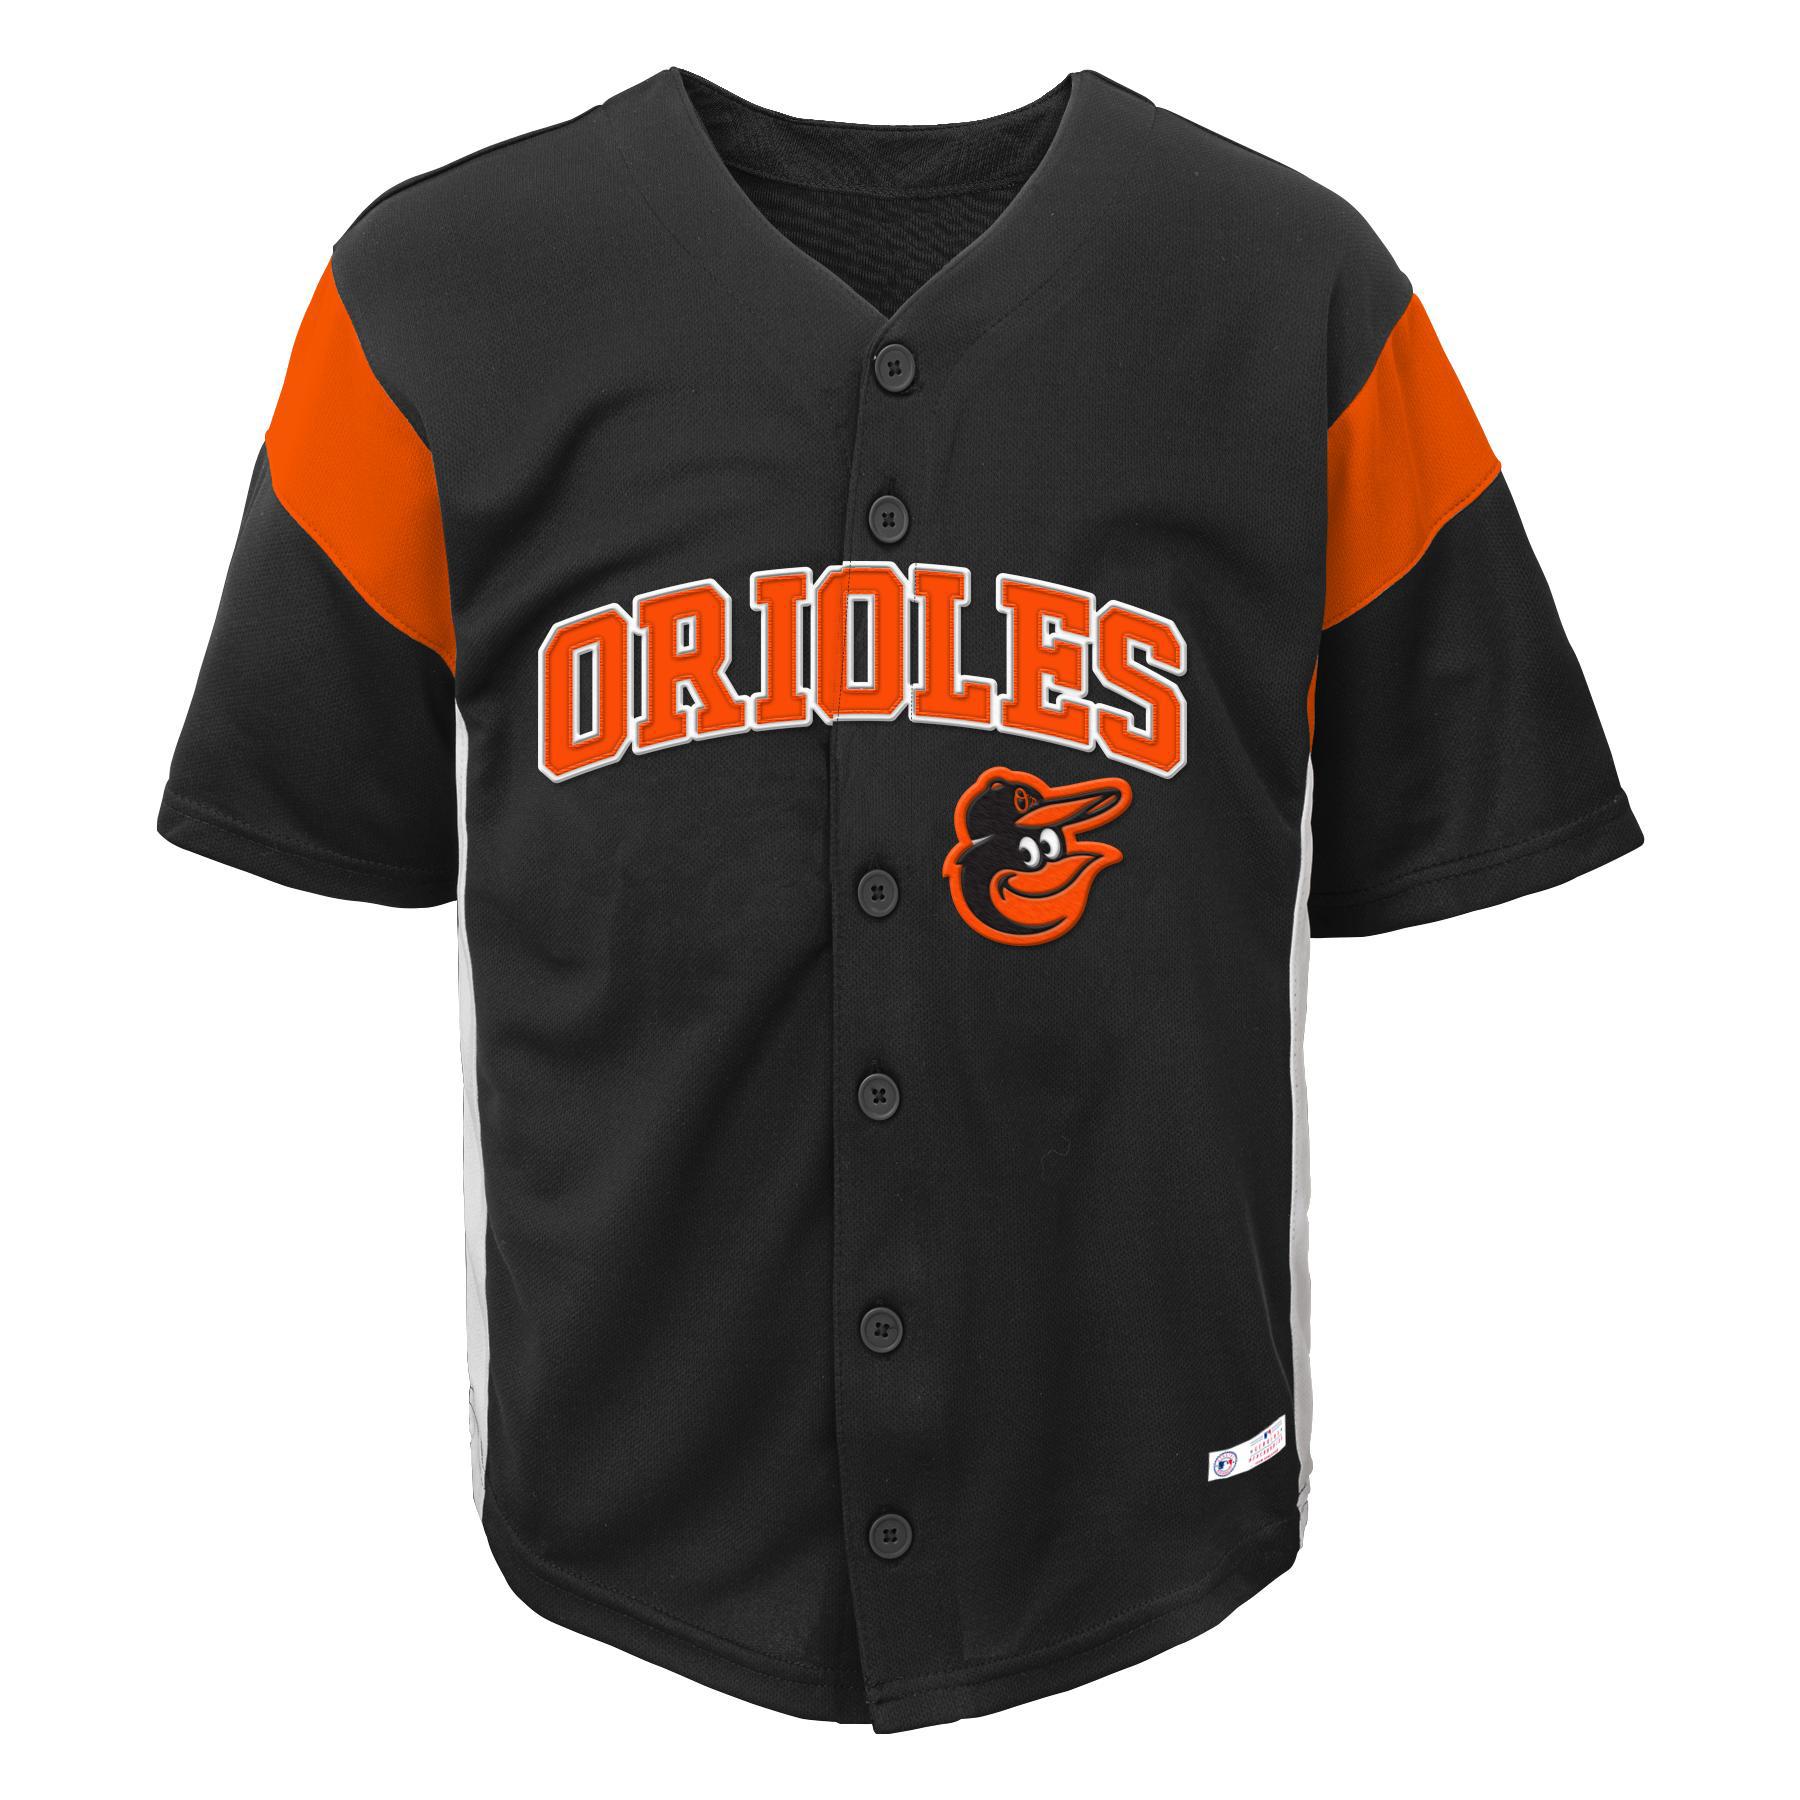 MLB Boy's Baseball Jersey - Baltimore Orioles